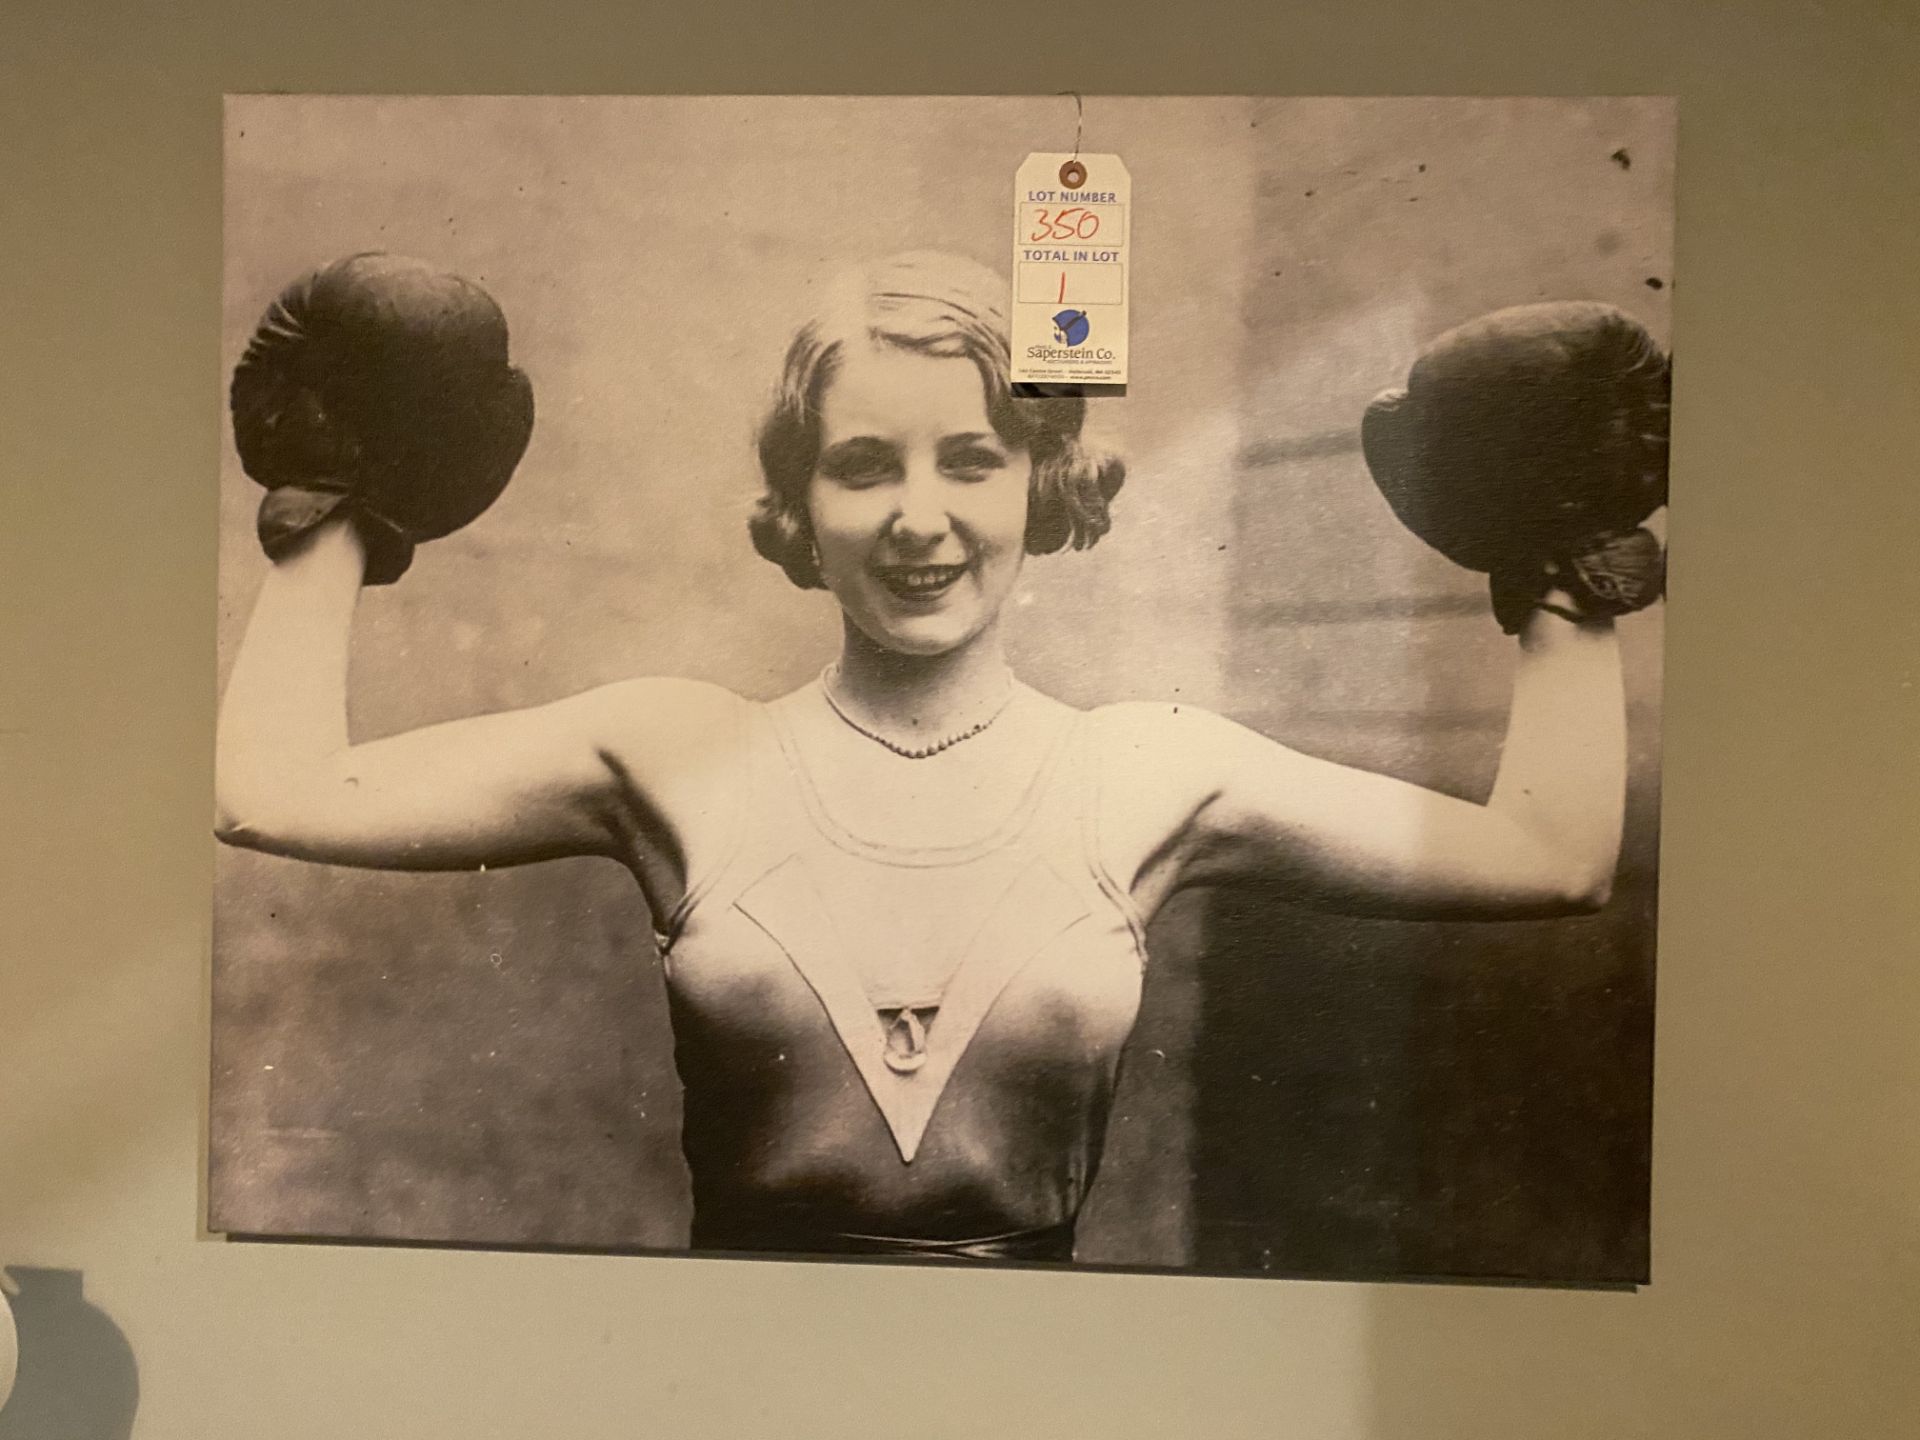 Custom Photograph on Canvas of Women Boxers 30" x 24"